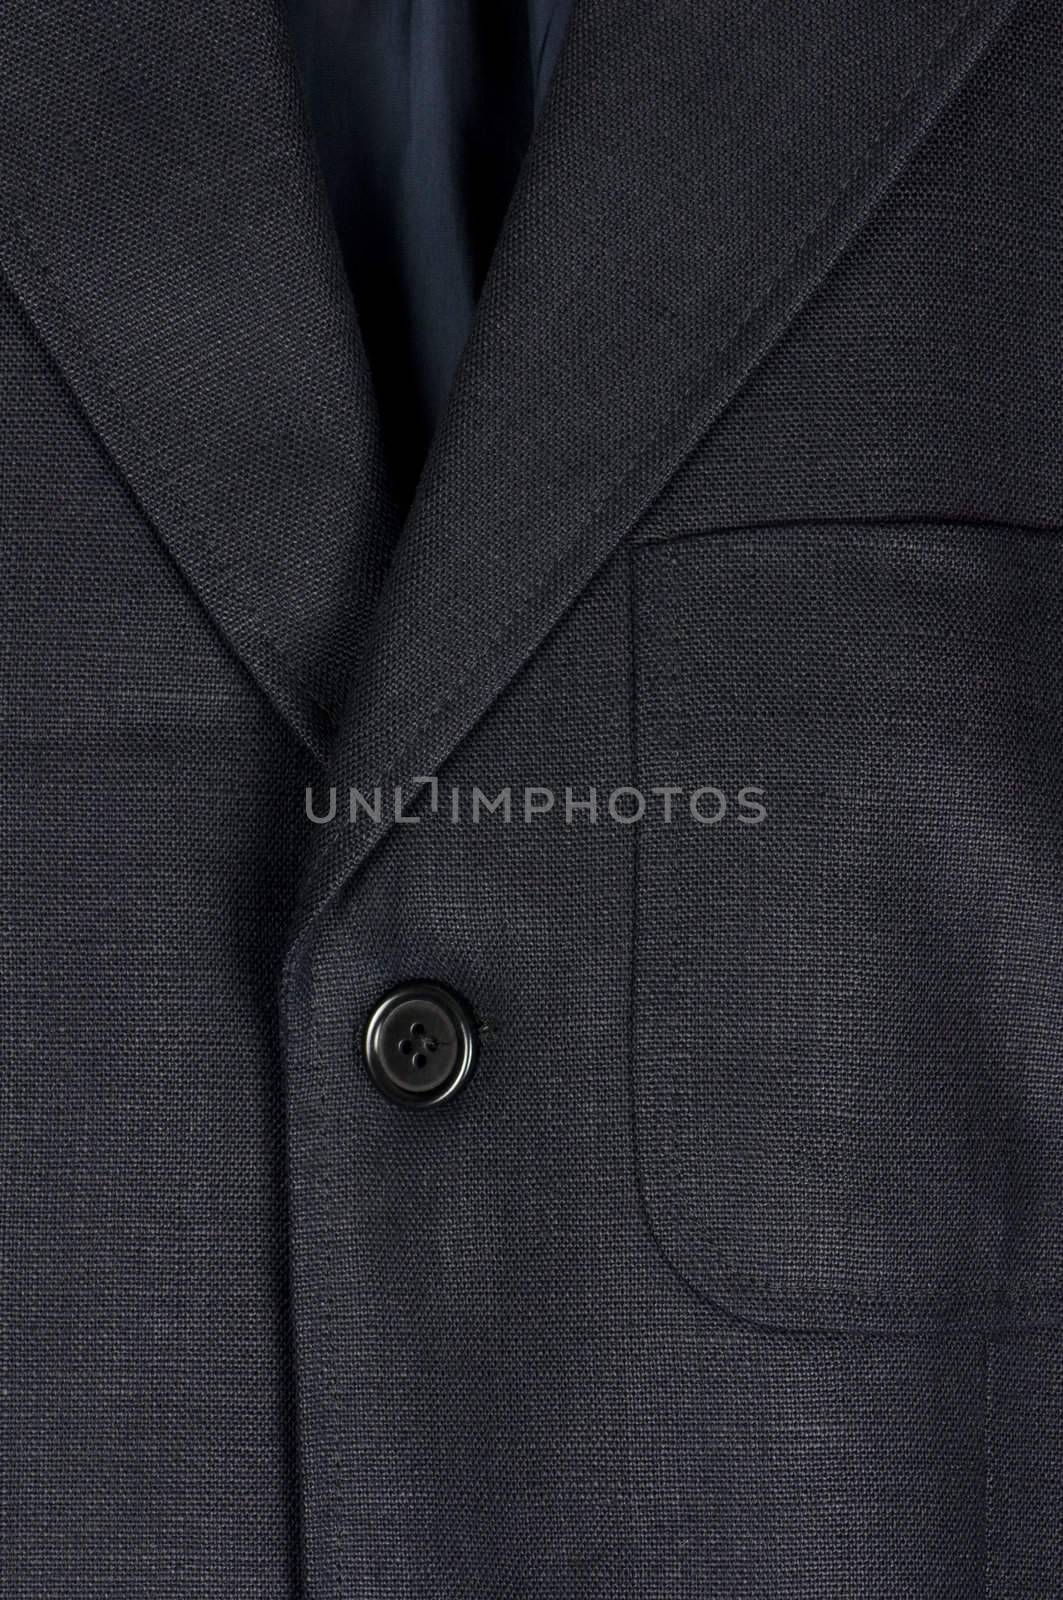 Linen jacket detail by dutourdumonde